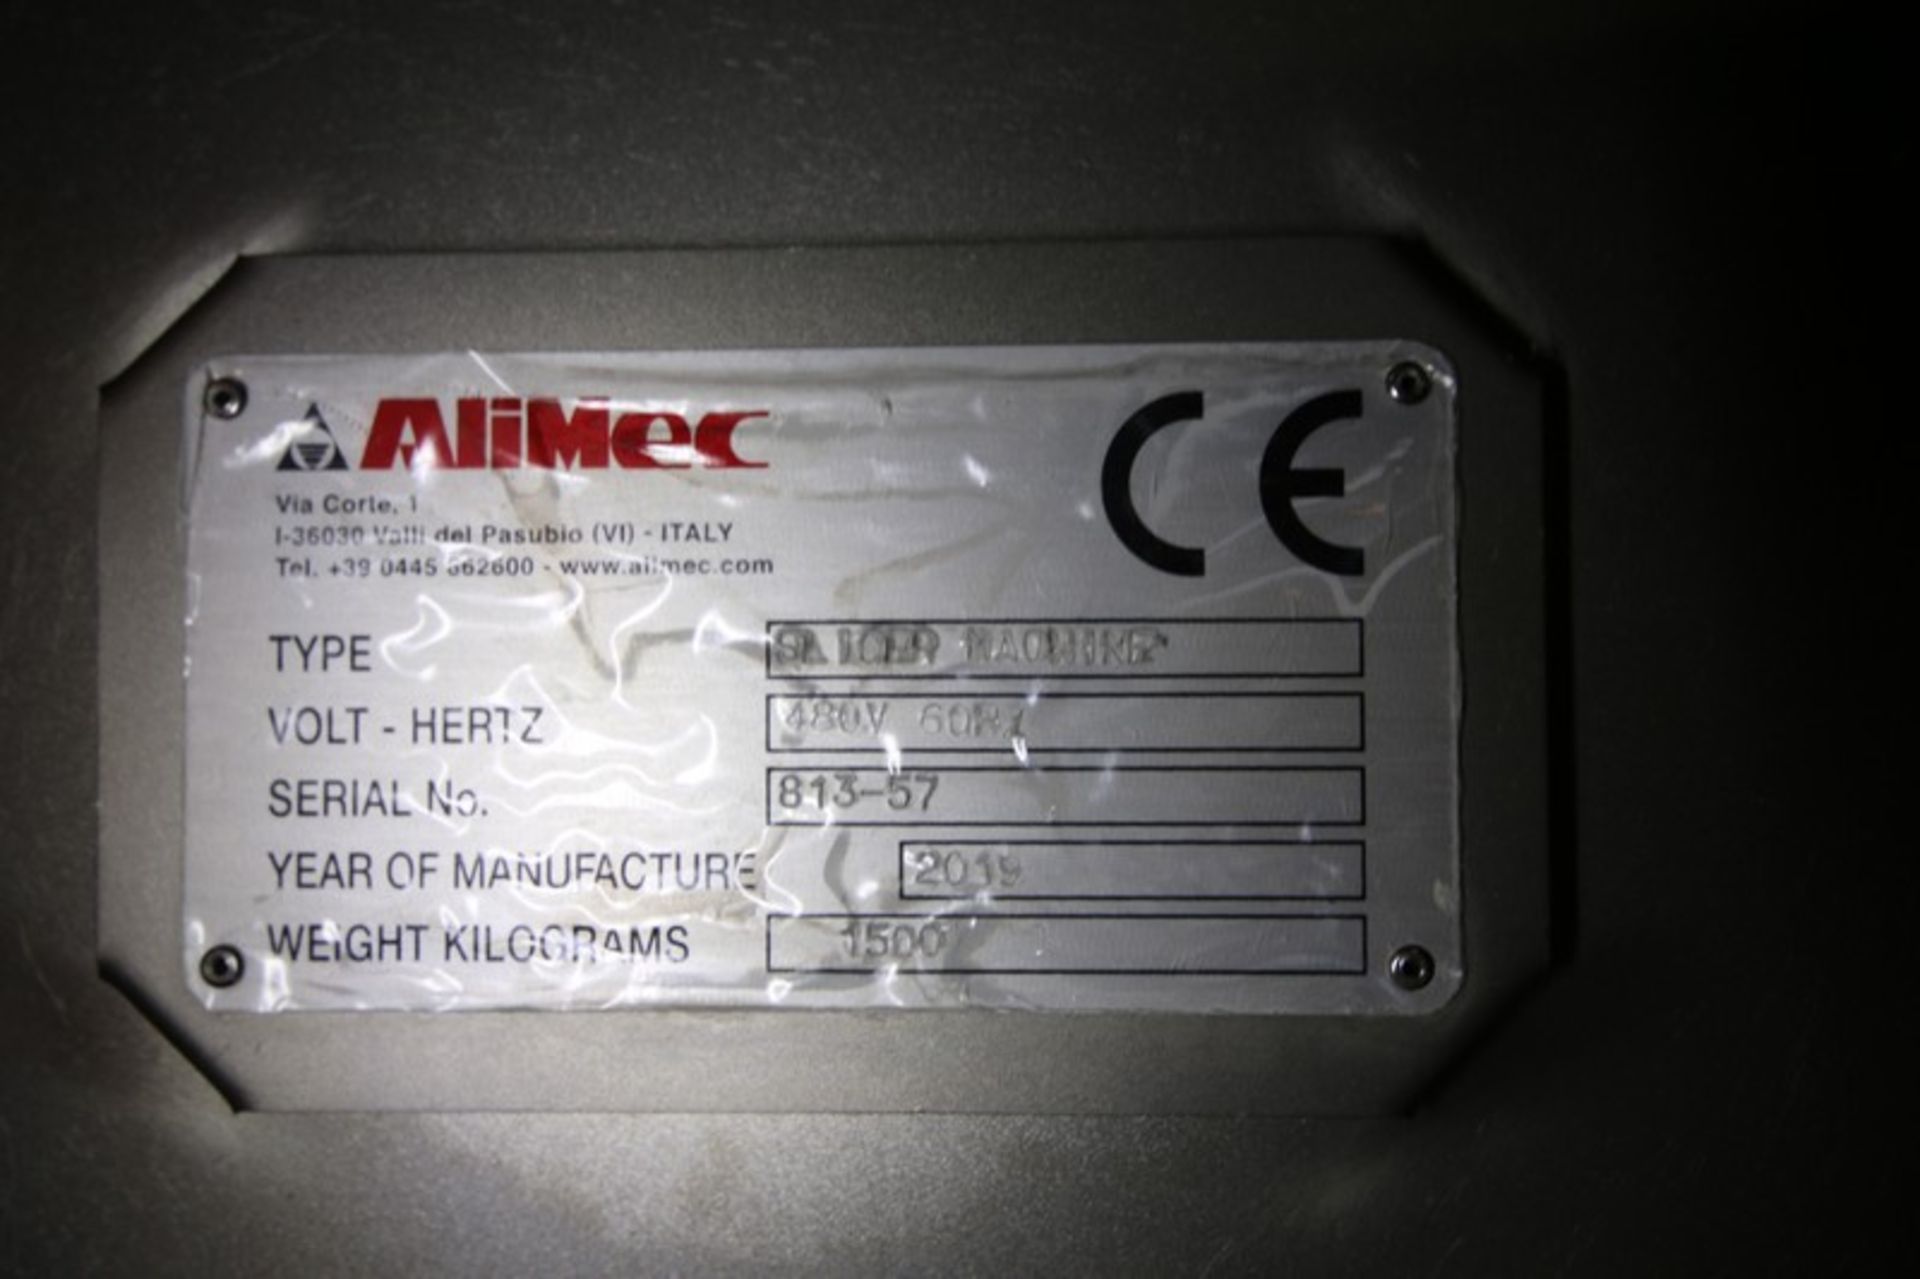 2019 Alimec S/S Pepperoni Slicer, Type SLICER MACHINE, SN 813-57, with Allen Bradley Stratix 5700 - Bild 10 aus 11